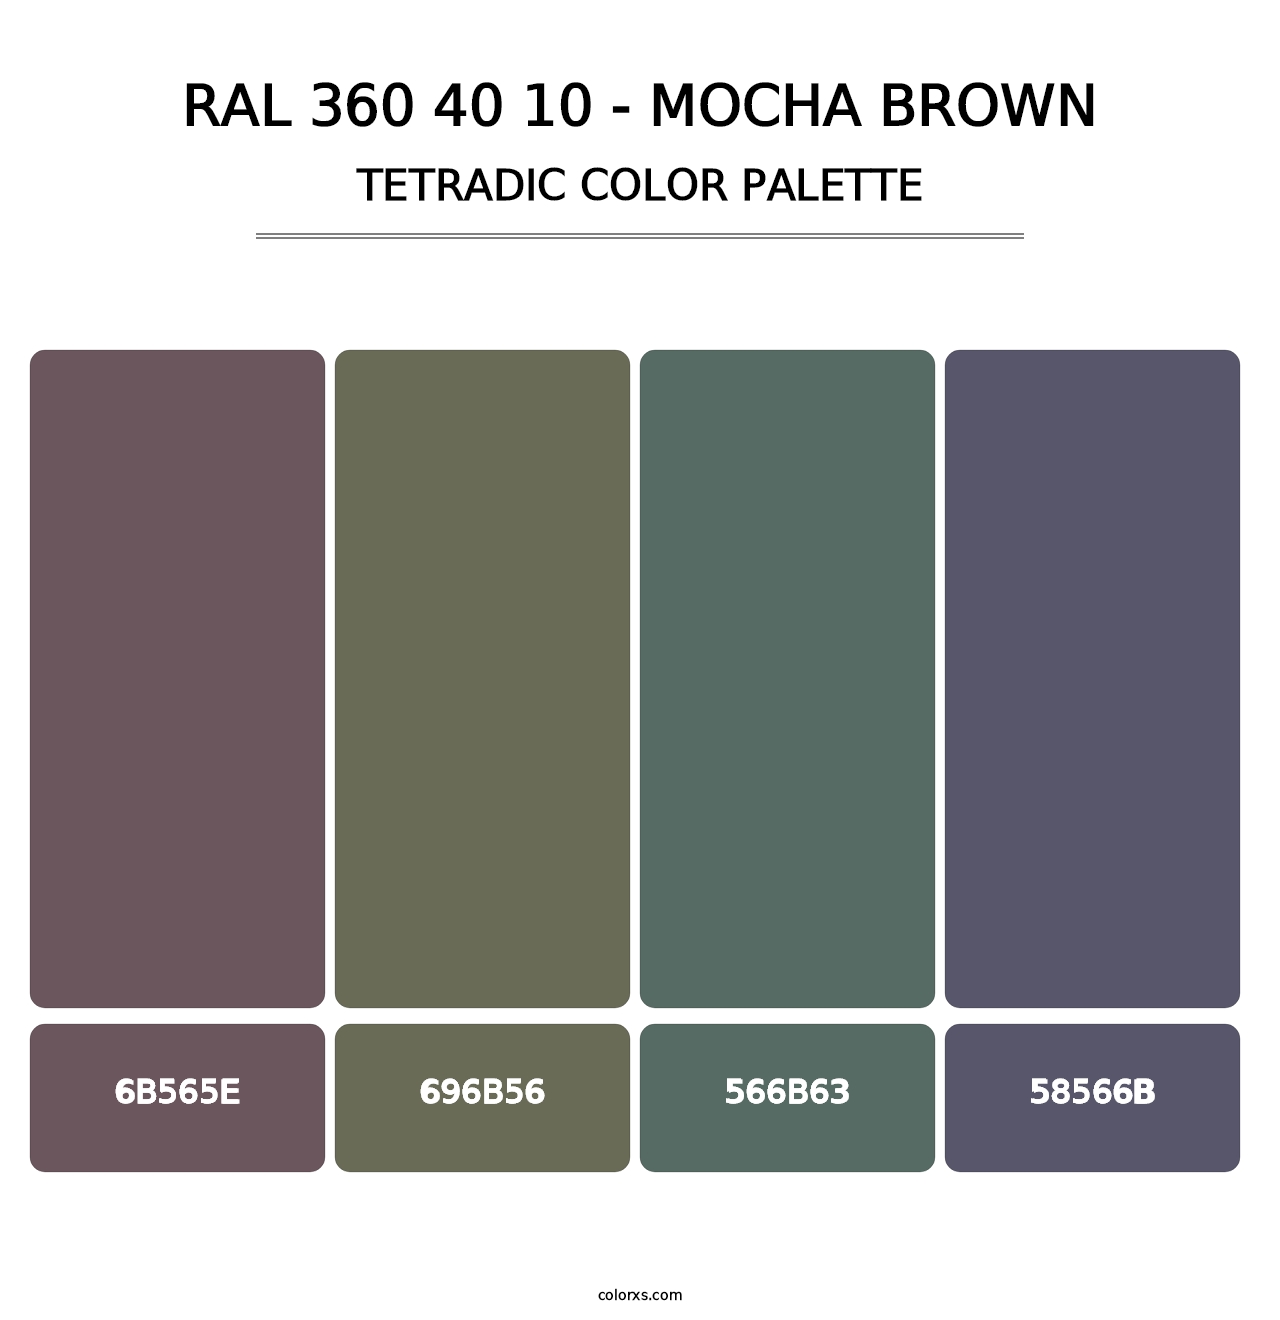 RAL 360 40 10 - Mocha Brown - Tetradic Color Palette